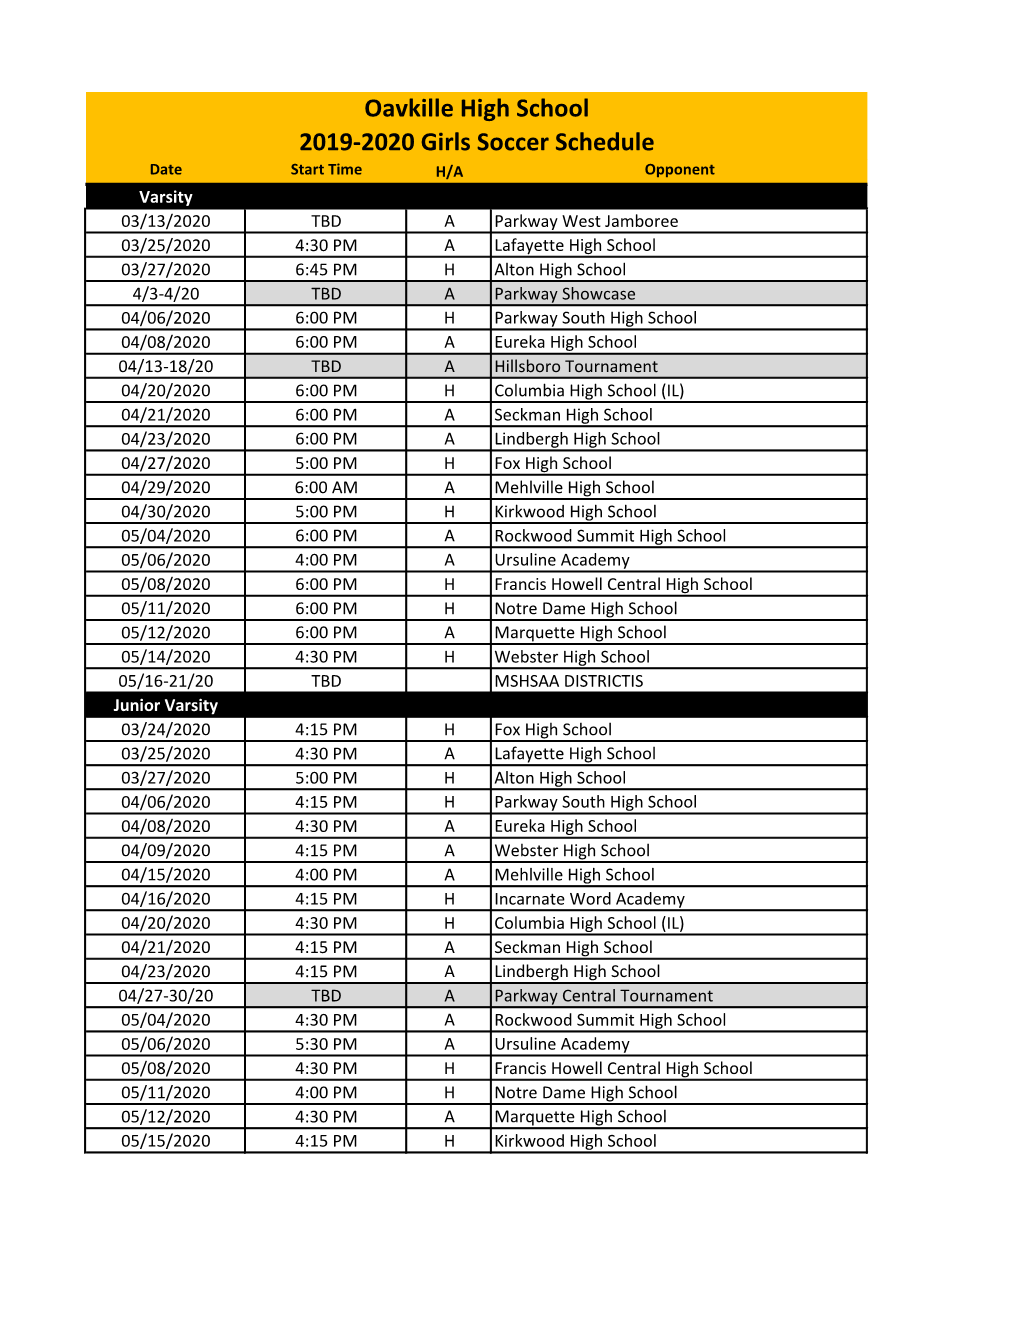 Oavkille High School 2019-2020 Girls Soccer Schedule